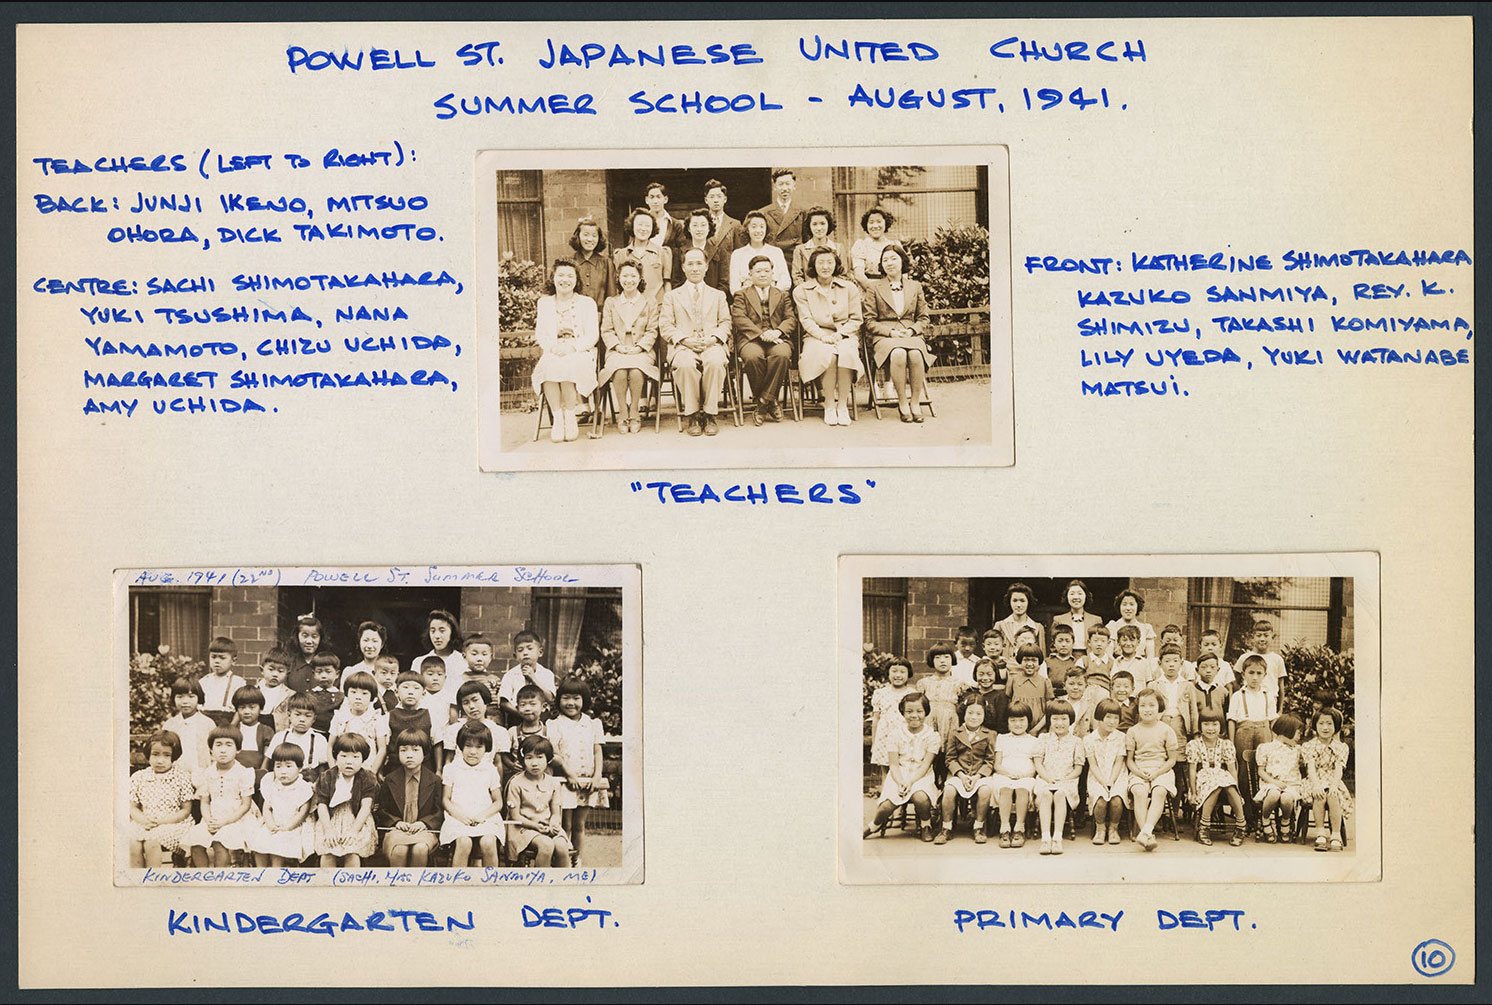 Powell St. Japanese United Church summer school